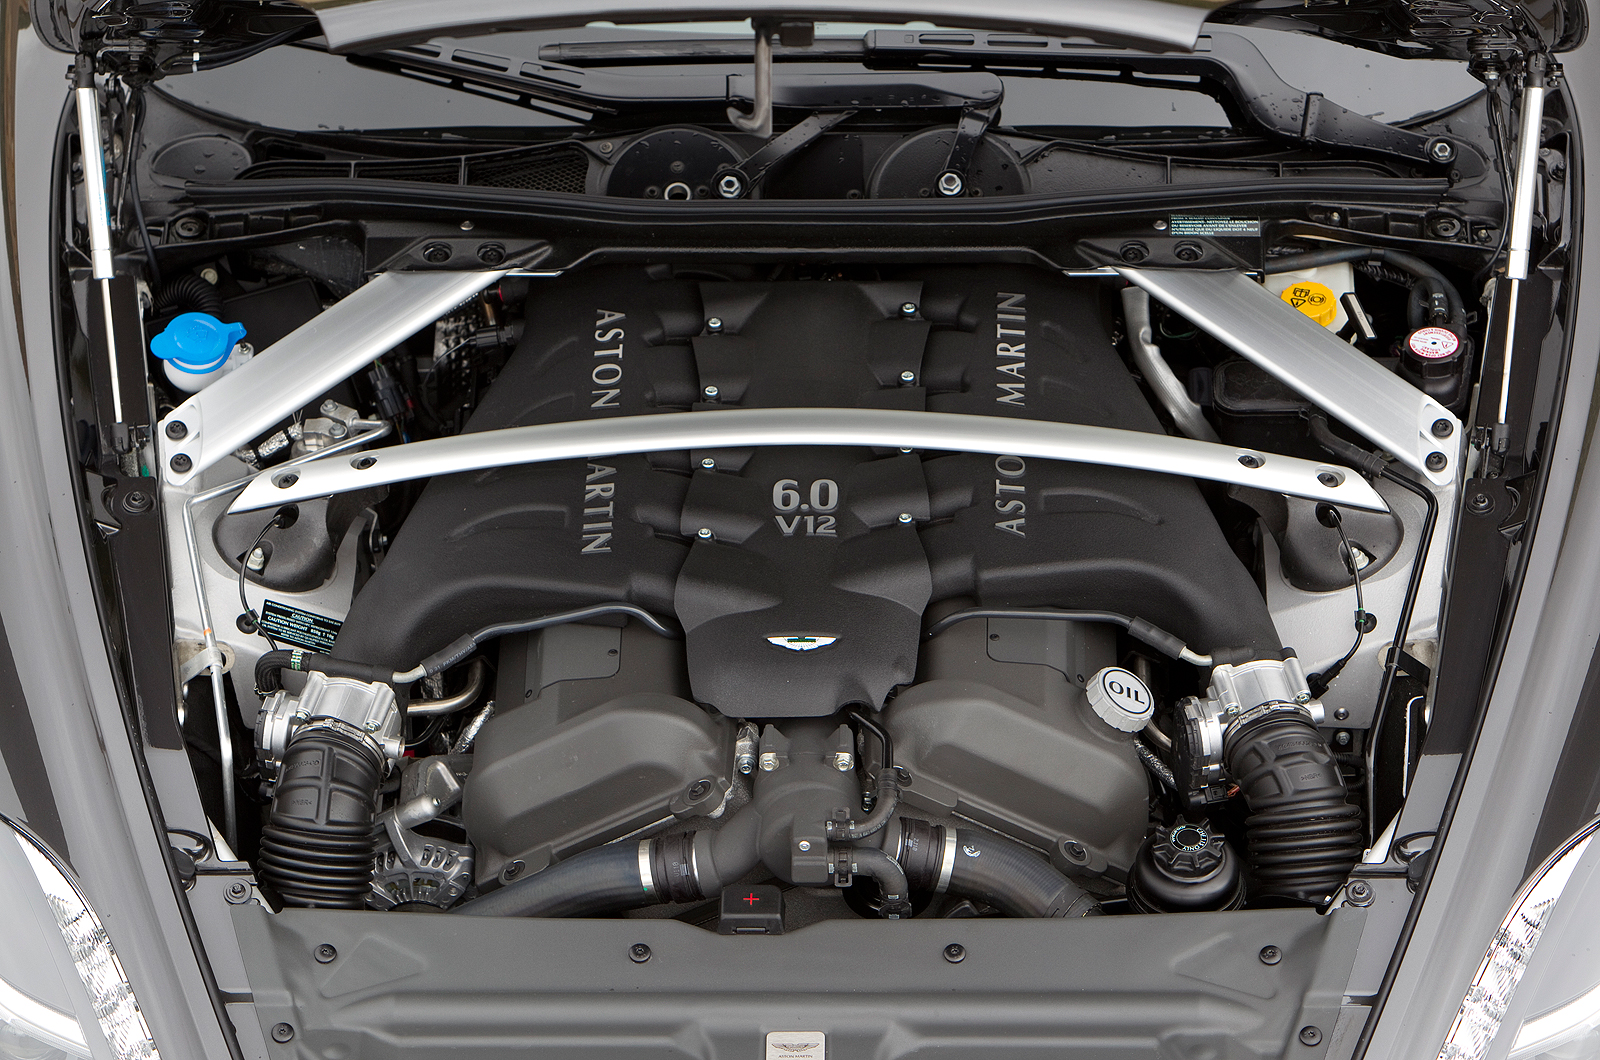 5.9-litre V12 Aston Martin Virage engine